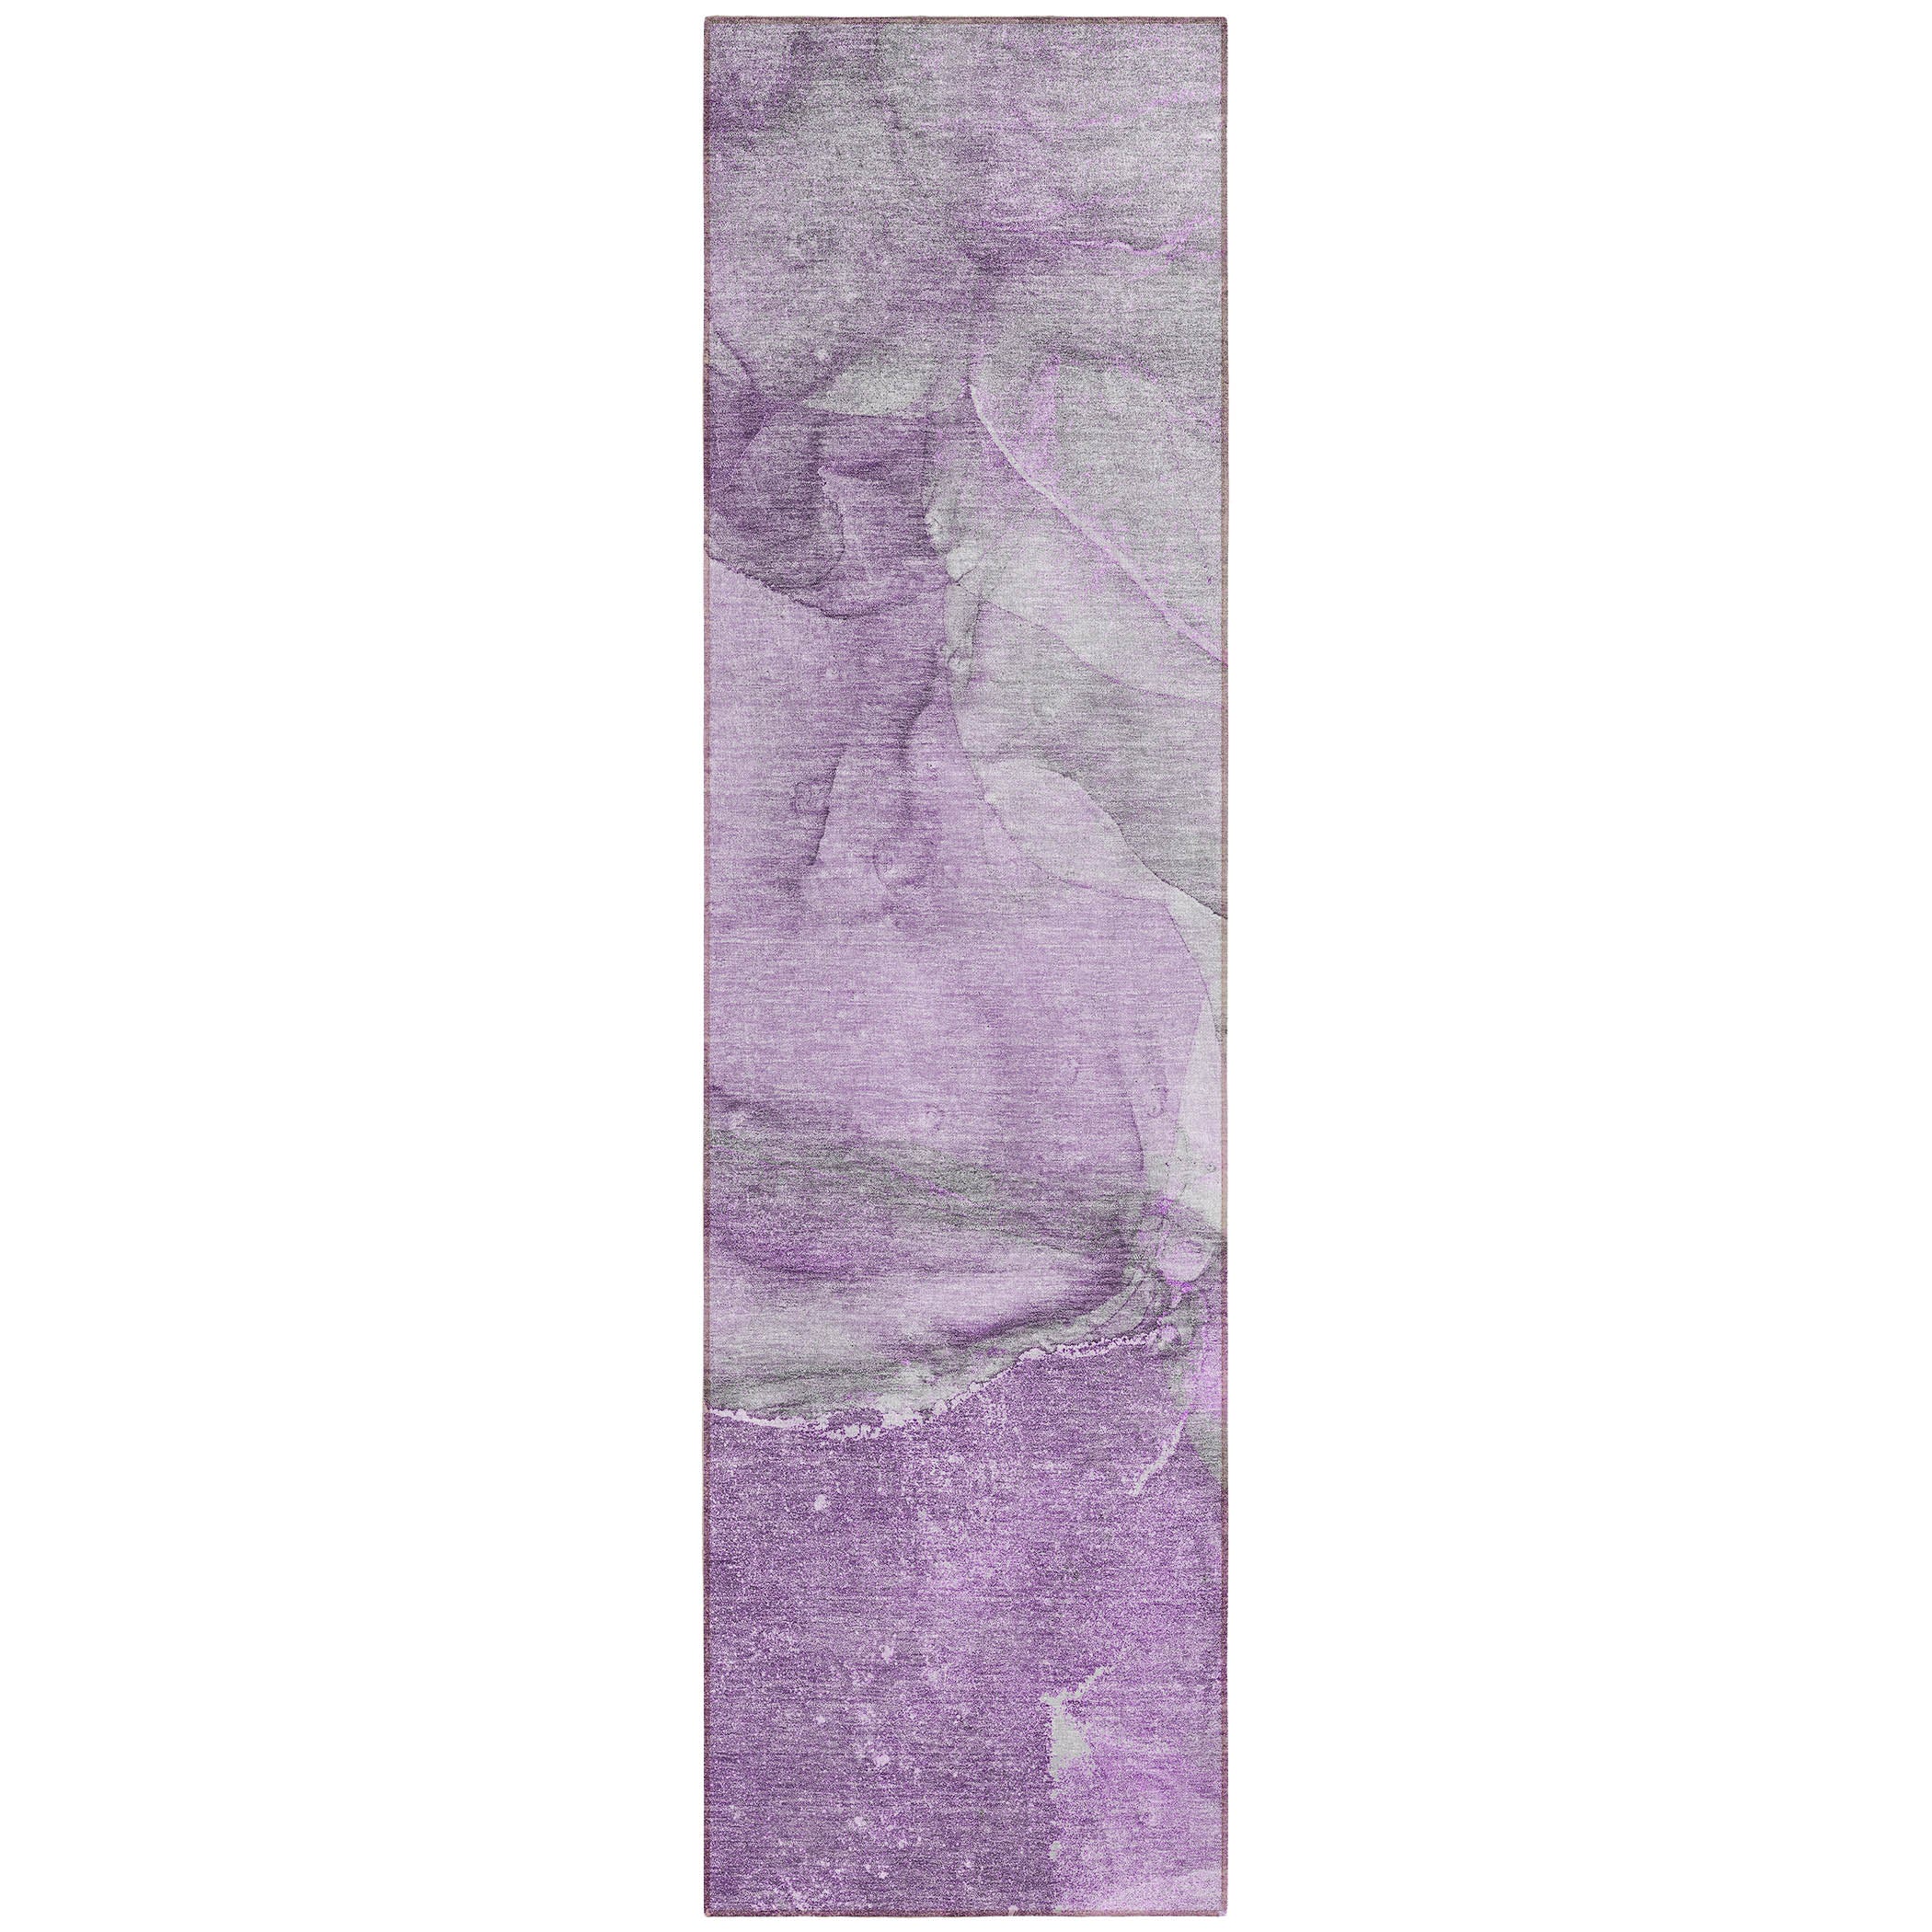 Chantille ACN524 Lilac